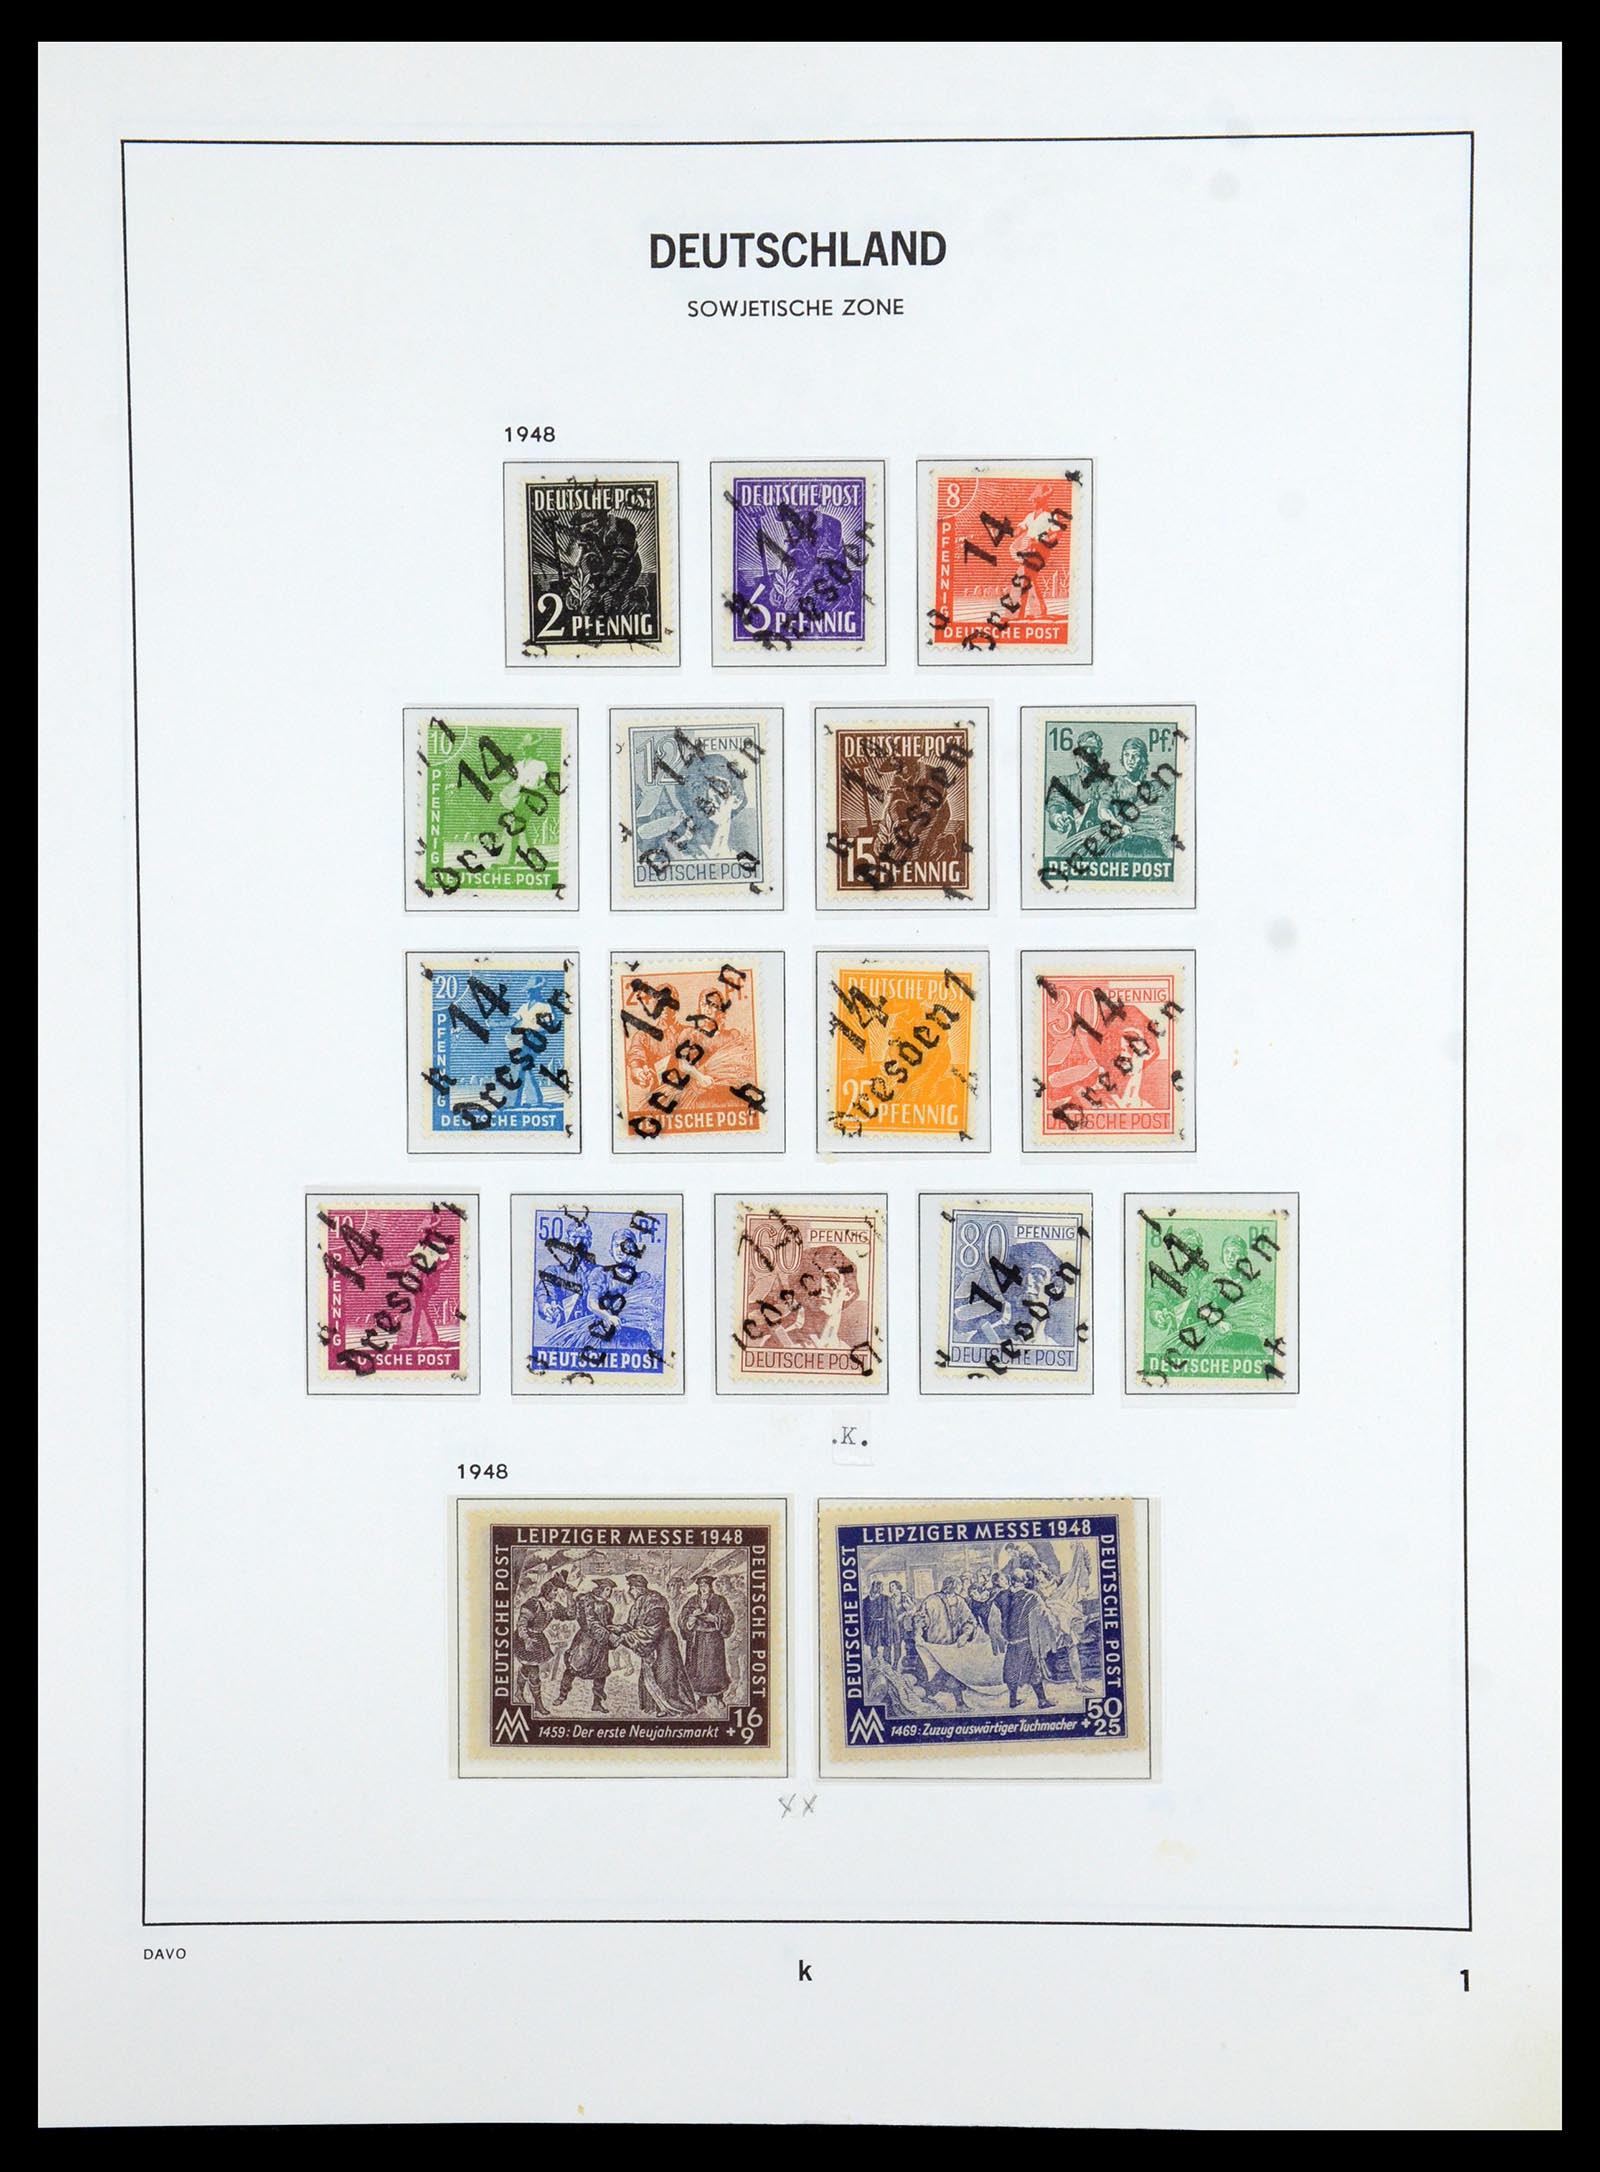 36421 039 - Stamp collection 36421 Soviet Zone 1945-1949.